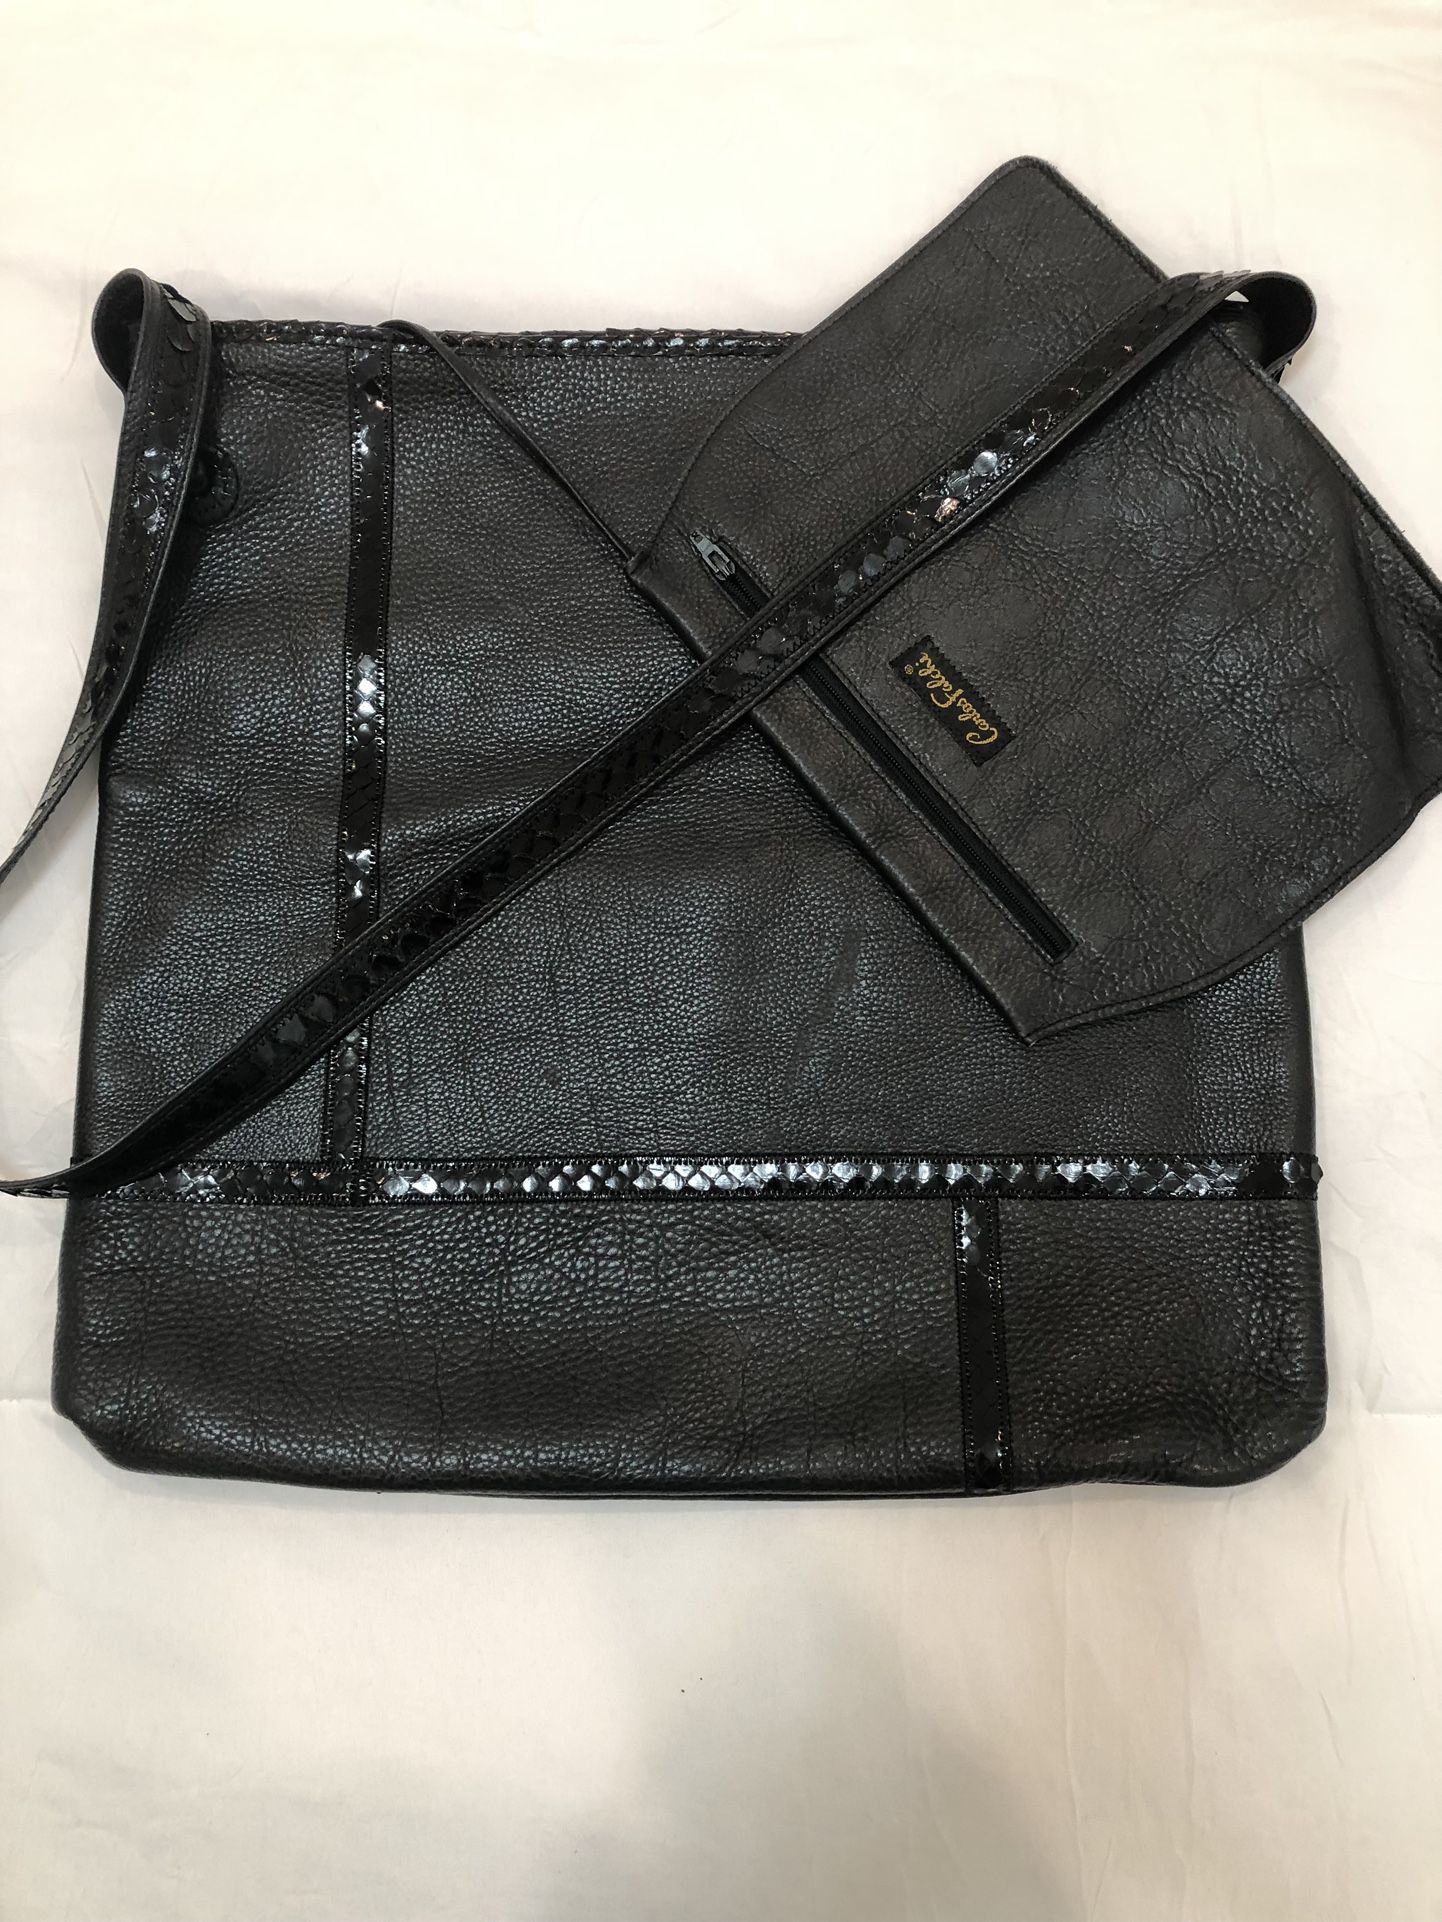 Carlos Falchi Black Leather Bag - NEVER USED